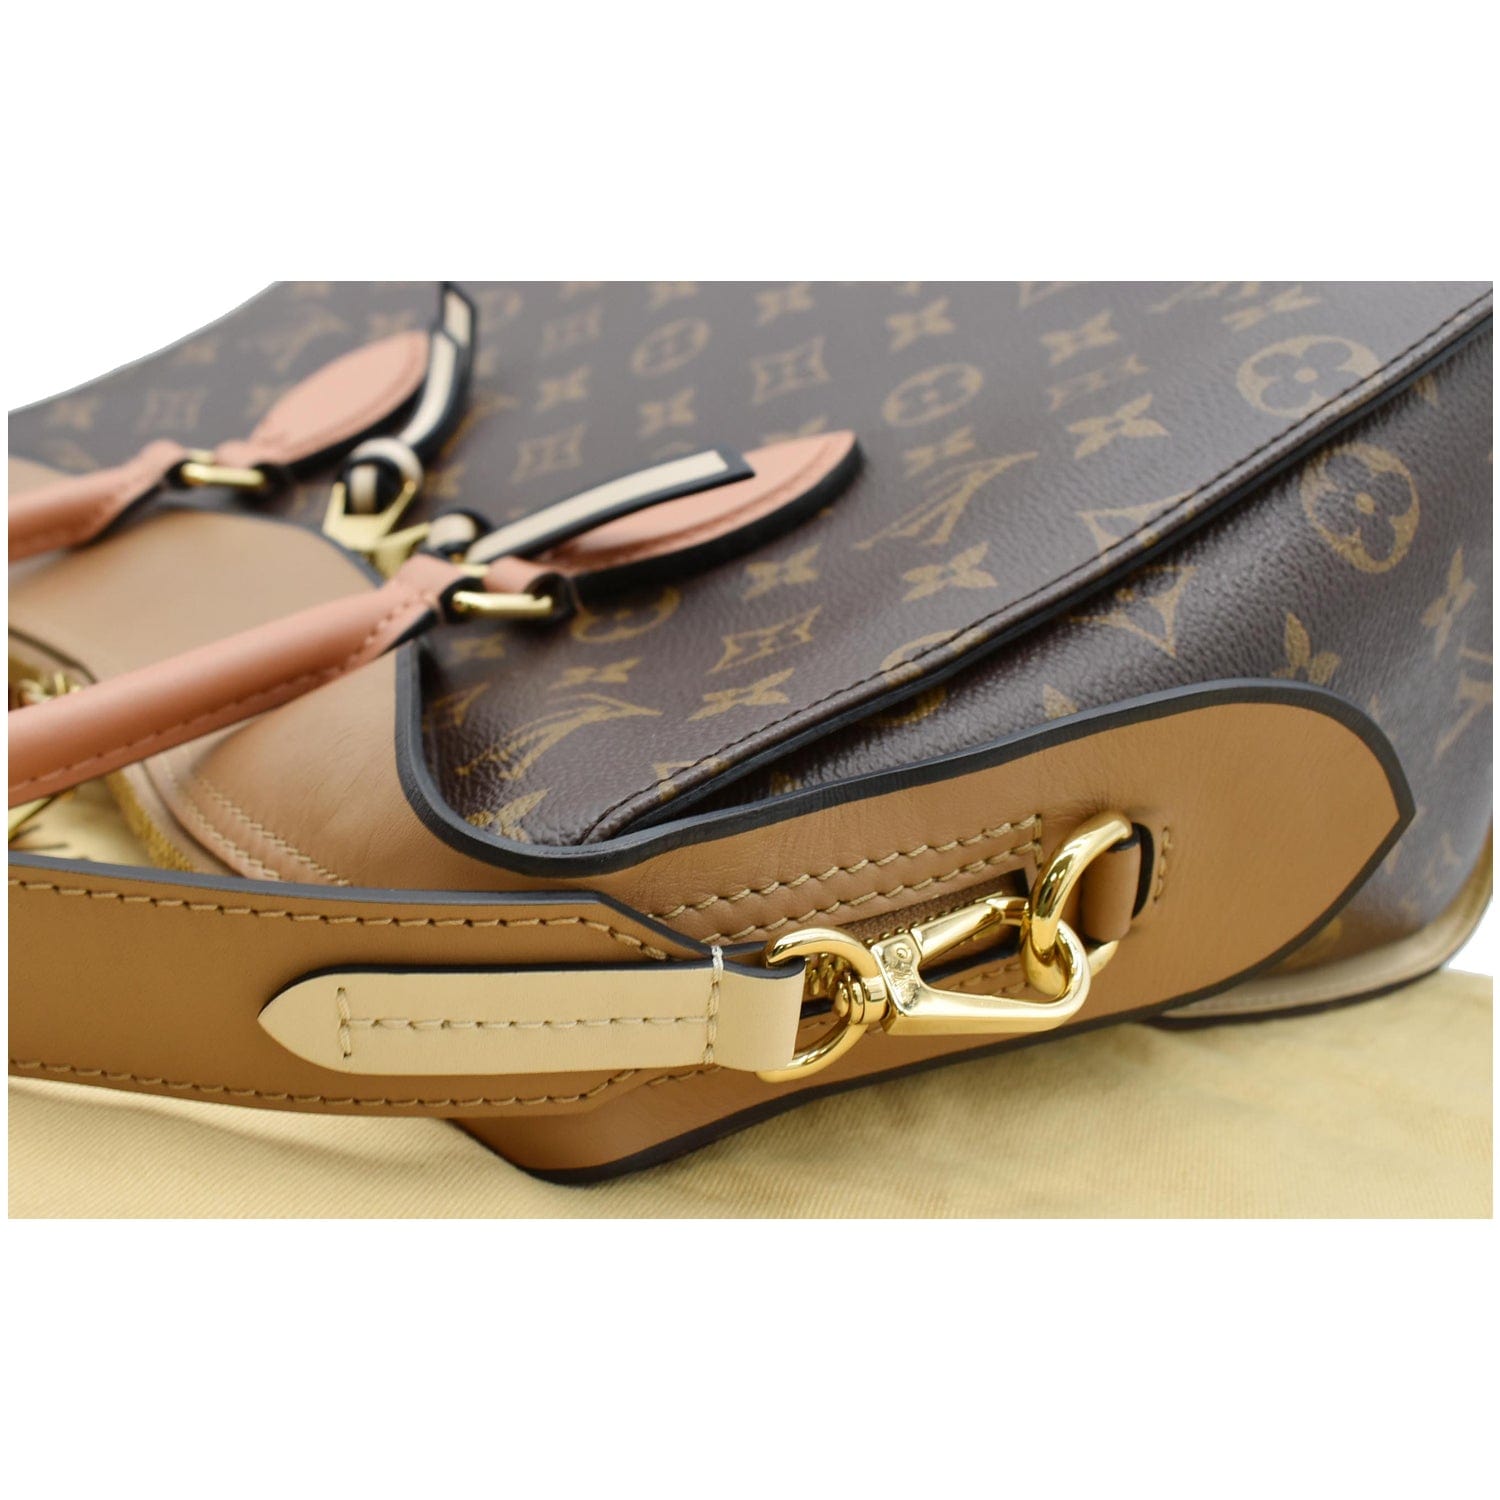 Louis Vuitton Tuileries Handbag 402421